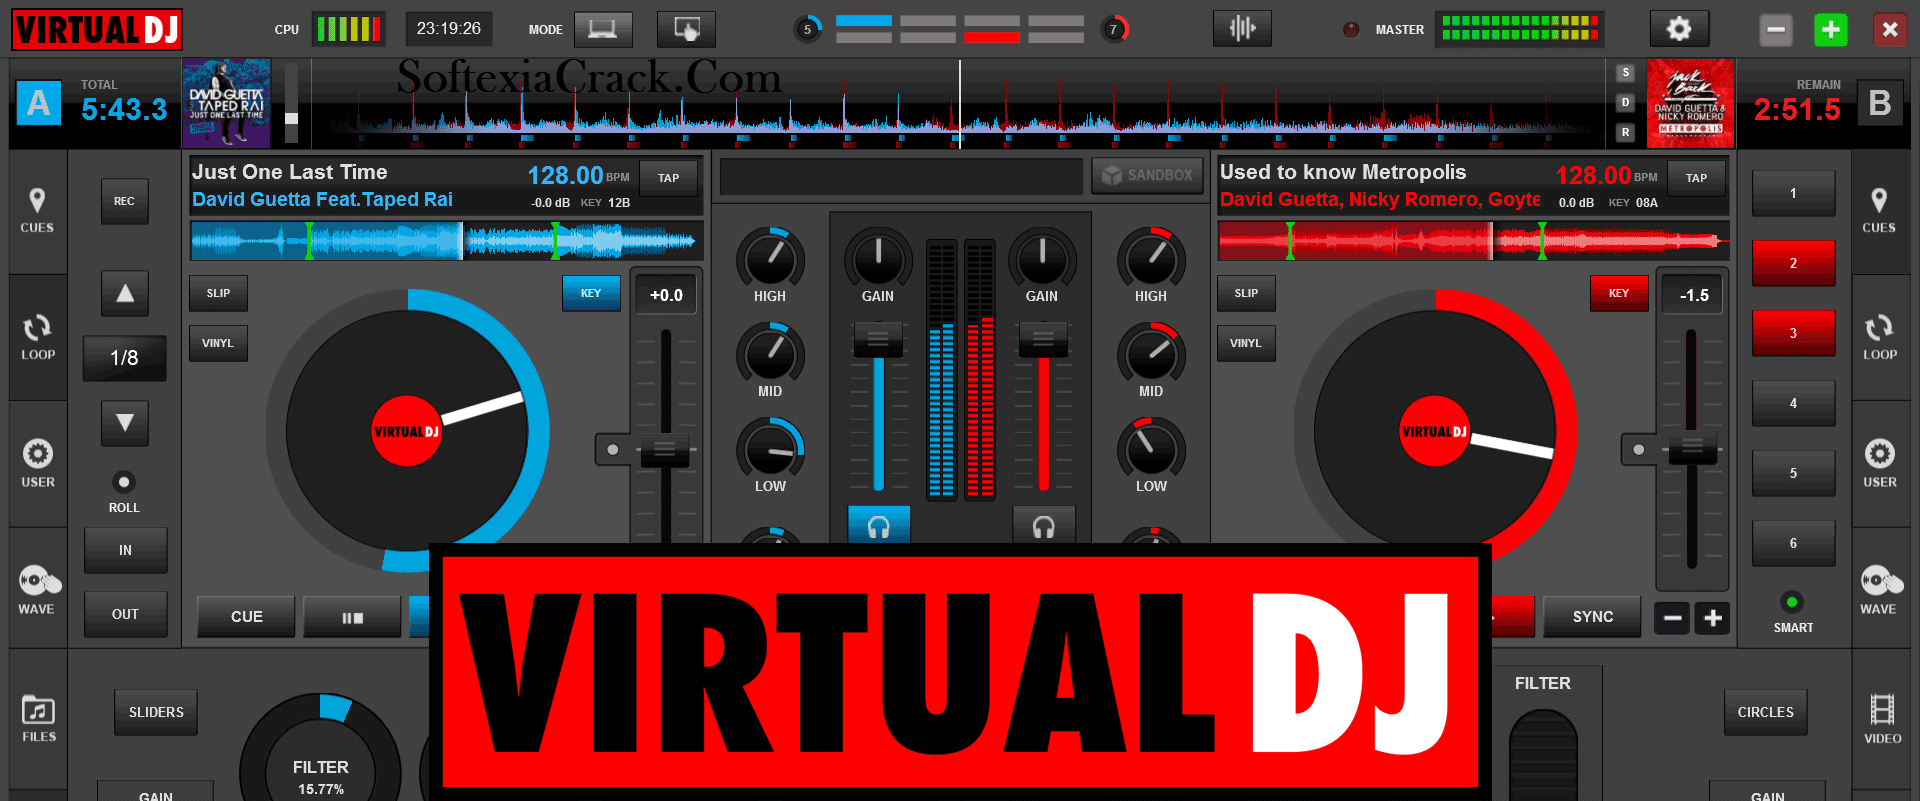 Download virtual dj 7 pro full crack mac